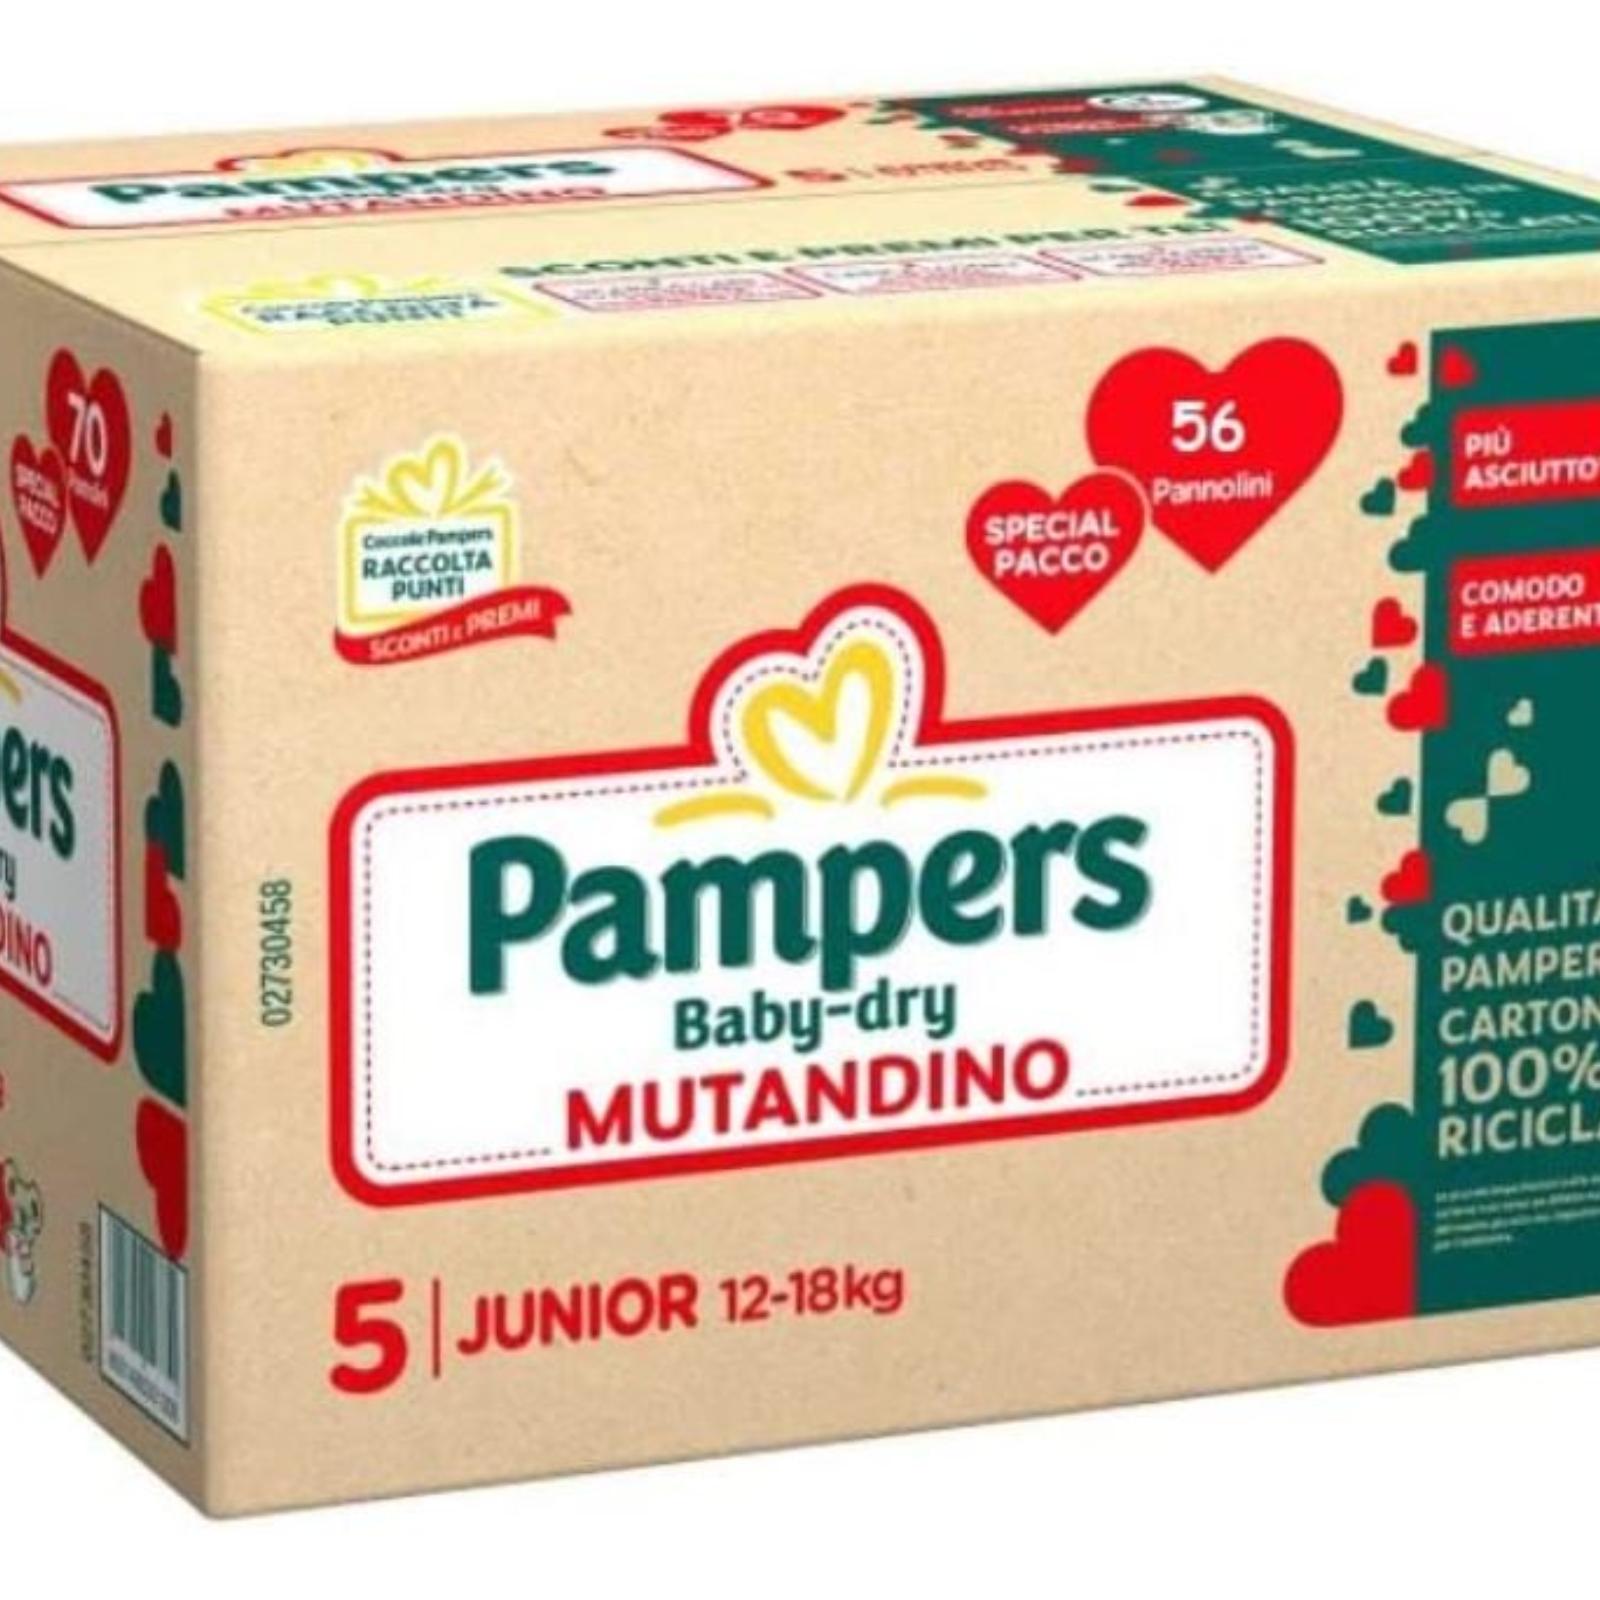 56 pannolini Baby-dry Mutandino Taglia 5 | Junior 12-18 kg